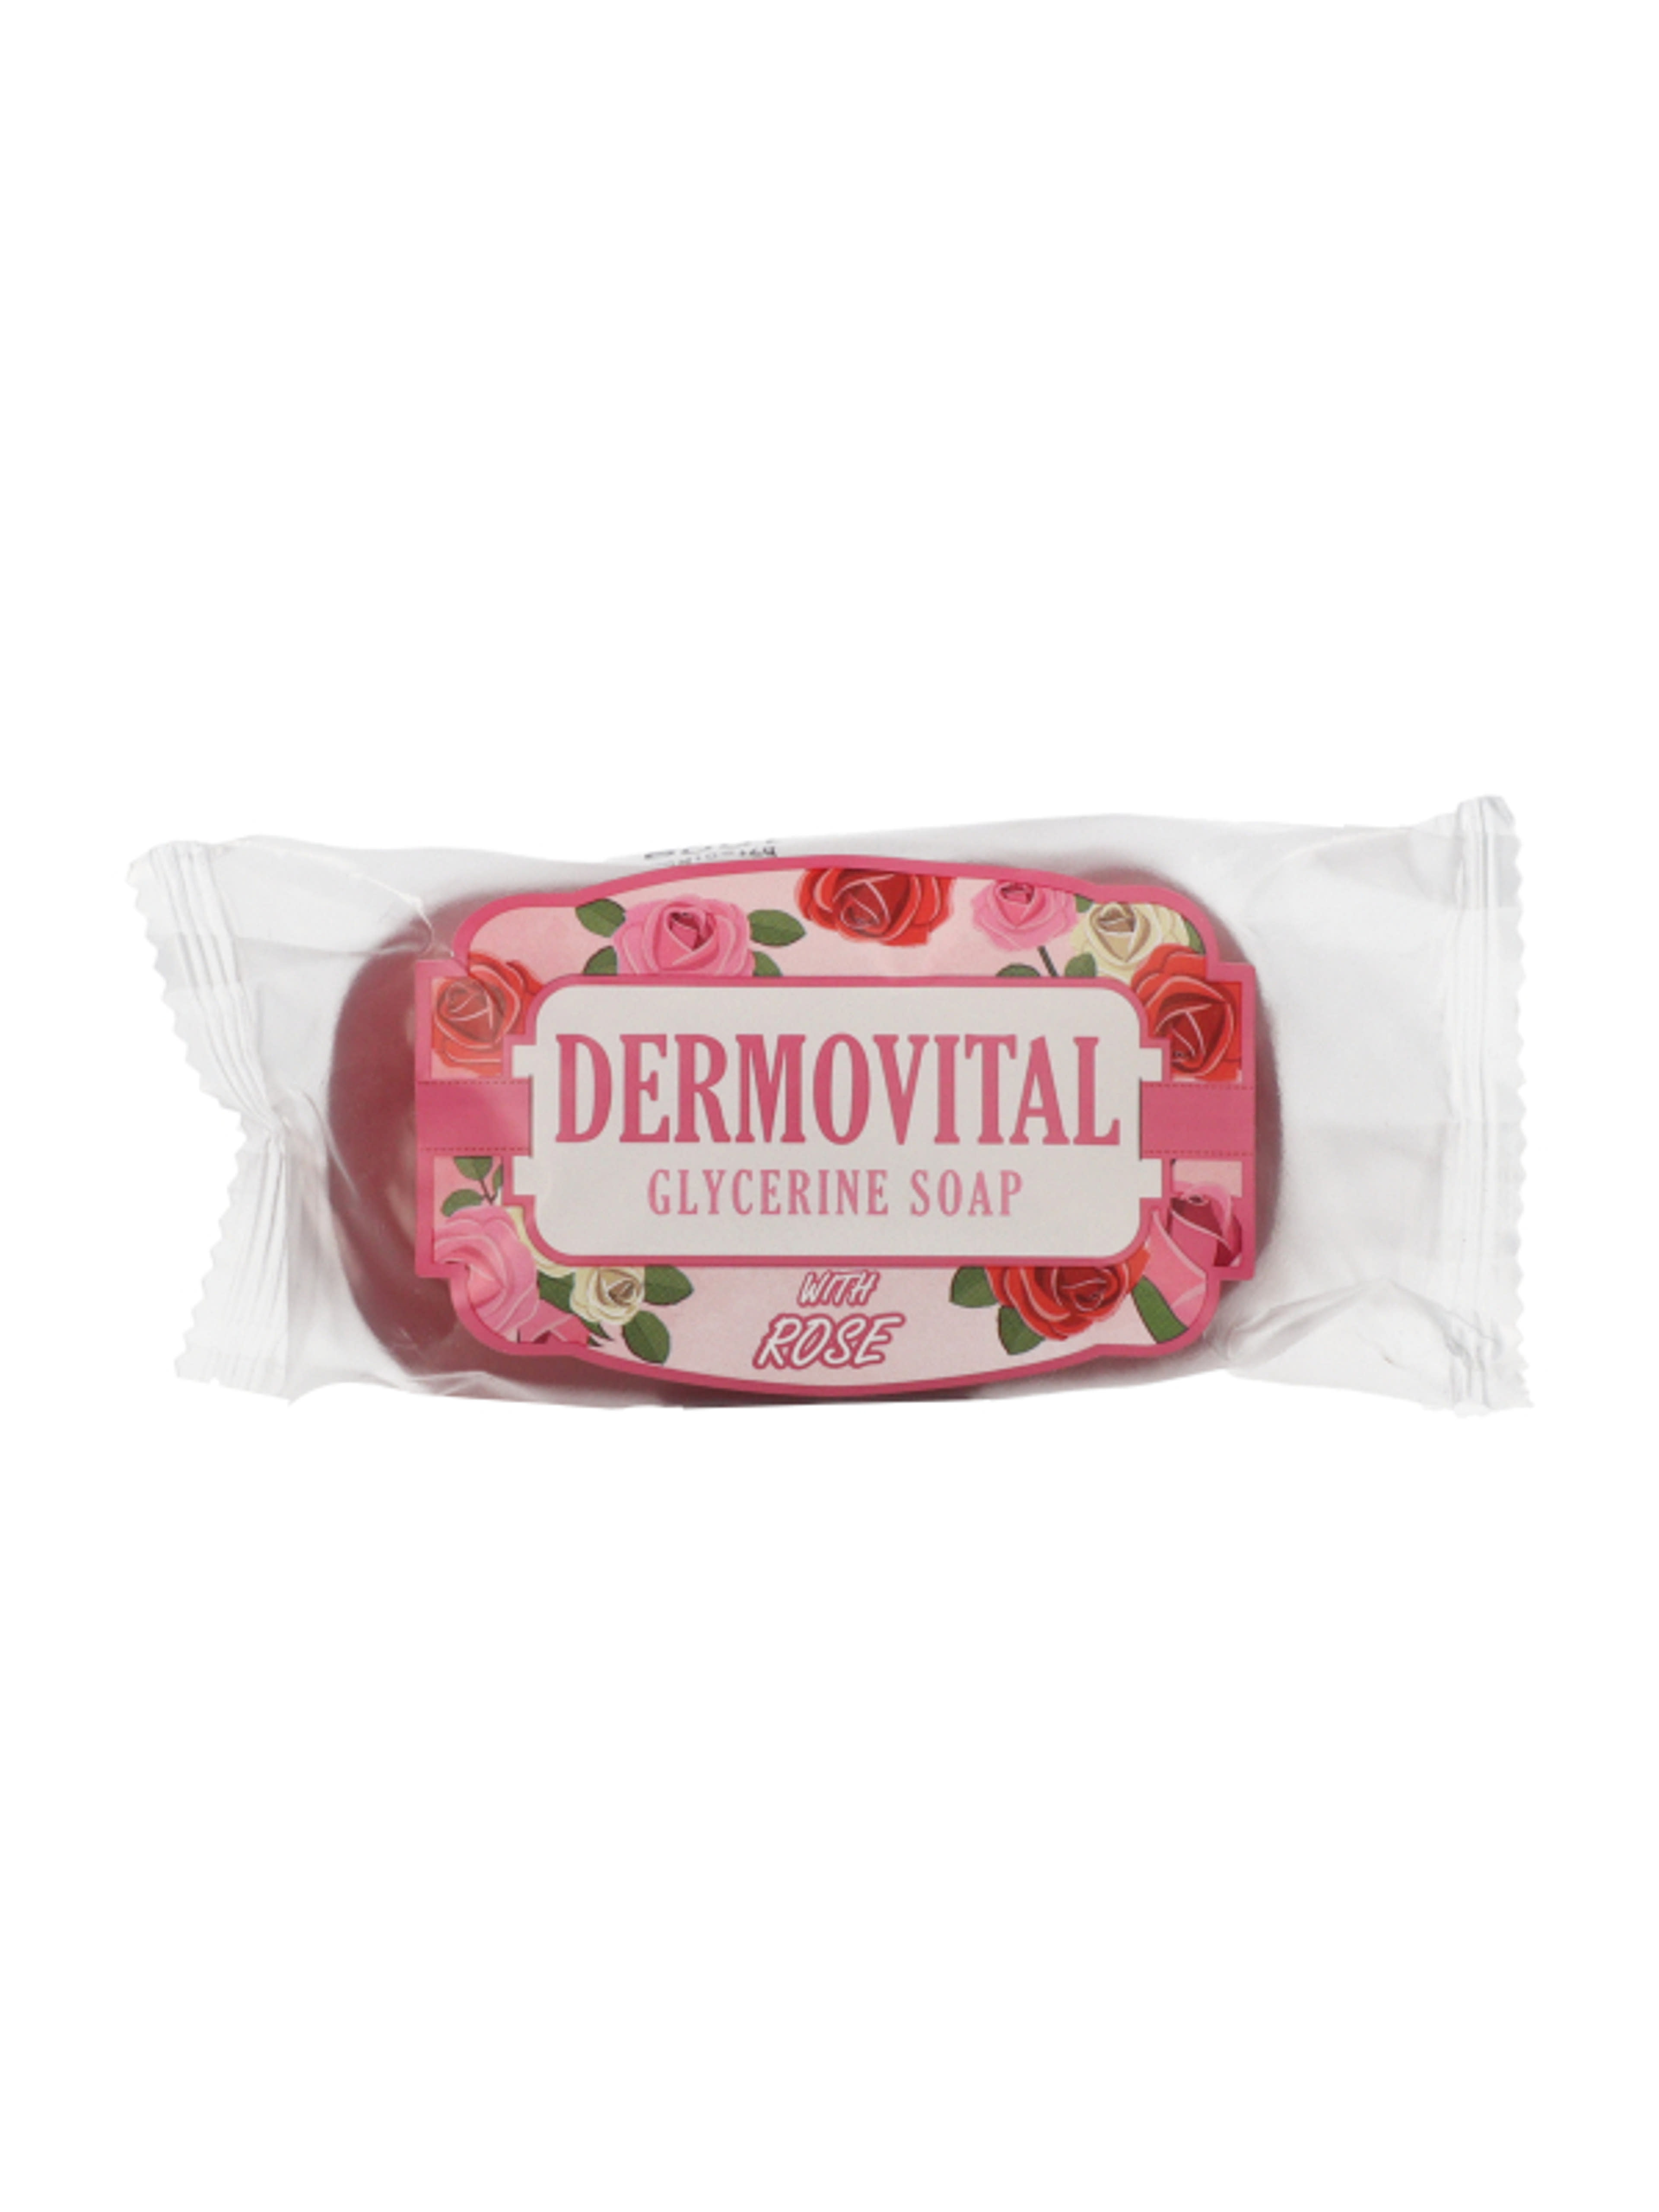 Dermovital Rose glicerines szappan - 100 g